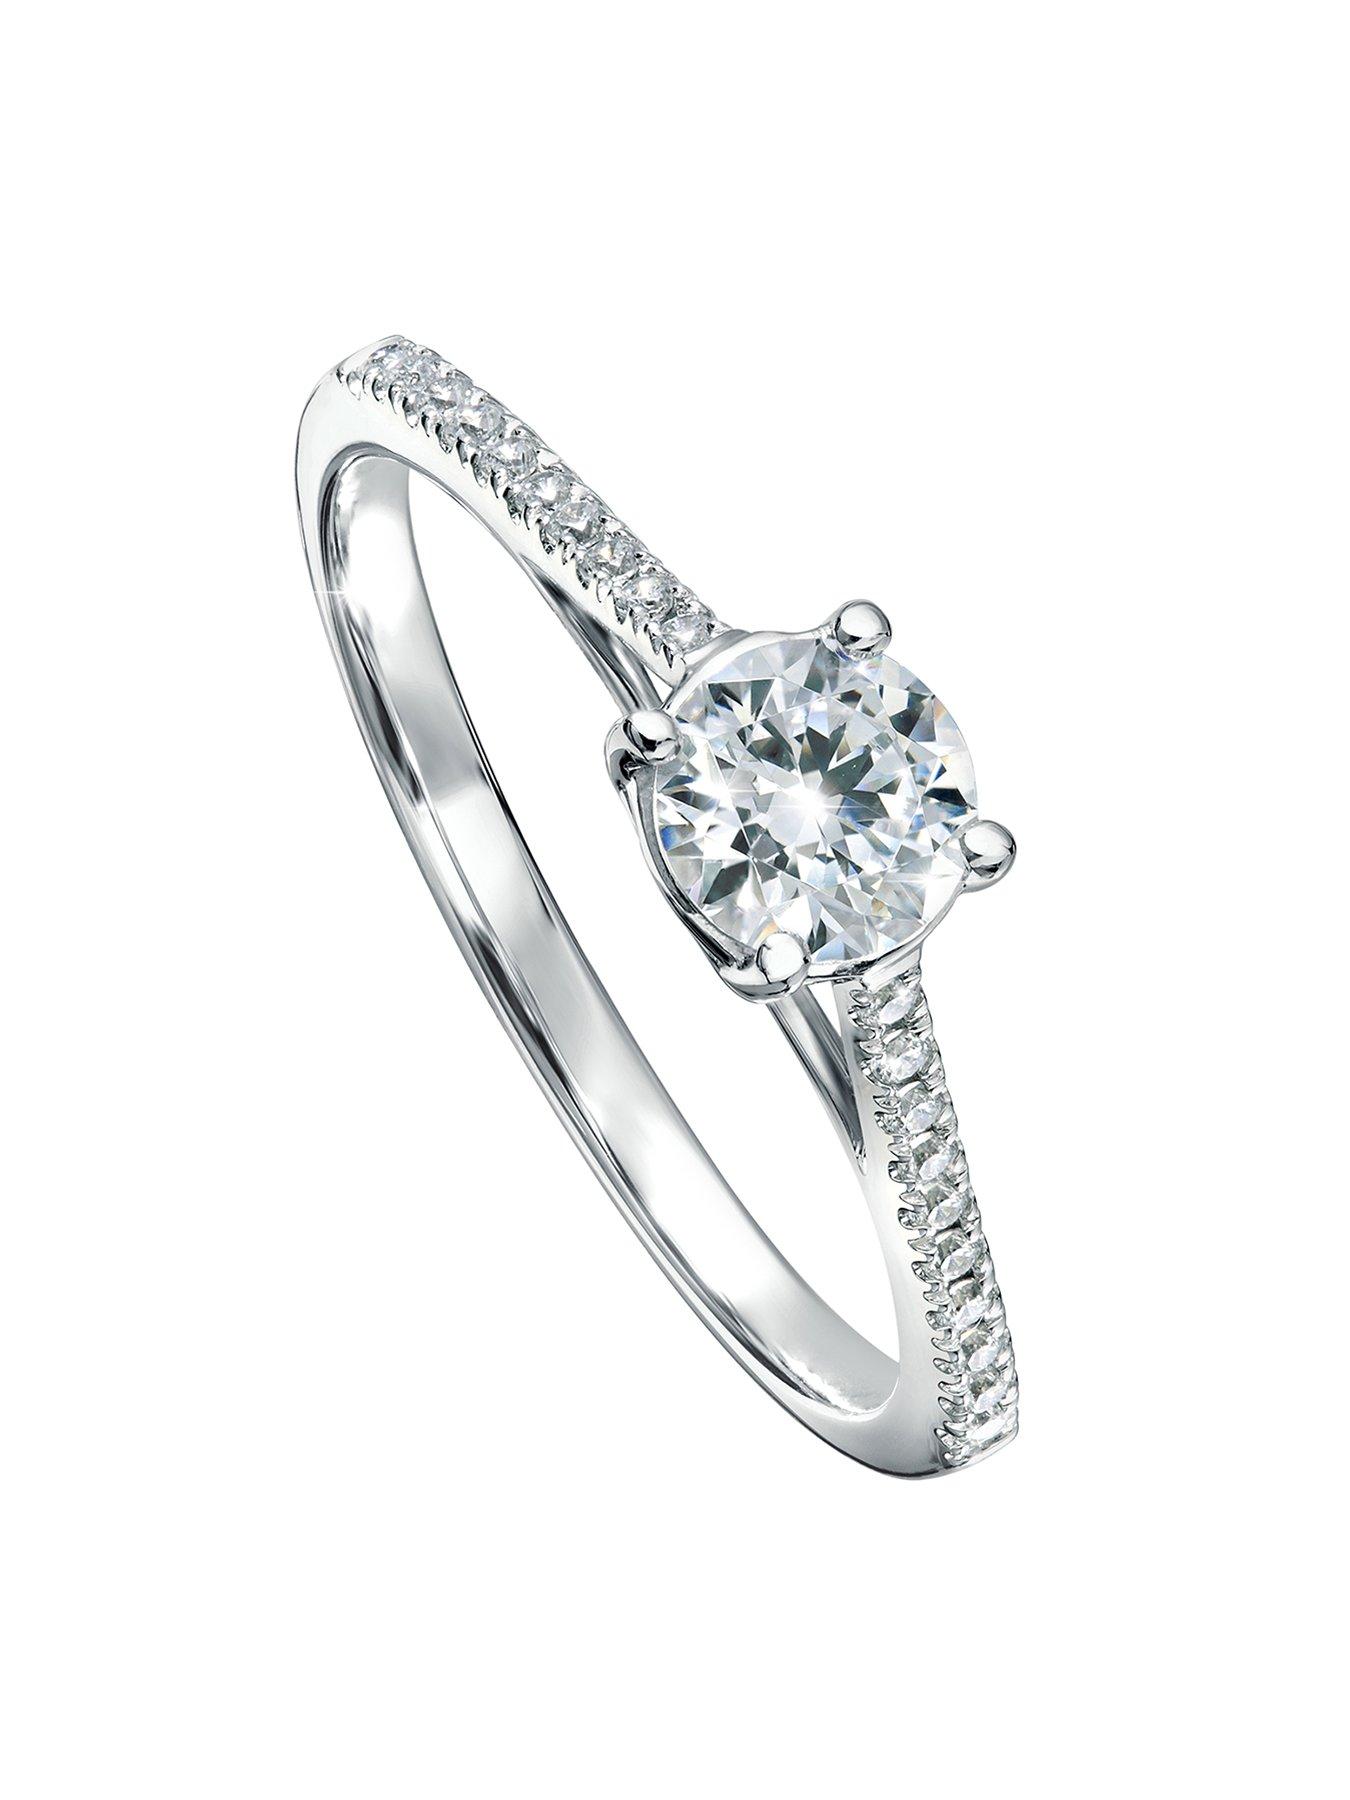 Shop Engagement Rings | Diamond Rings | Very Ireland